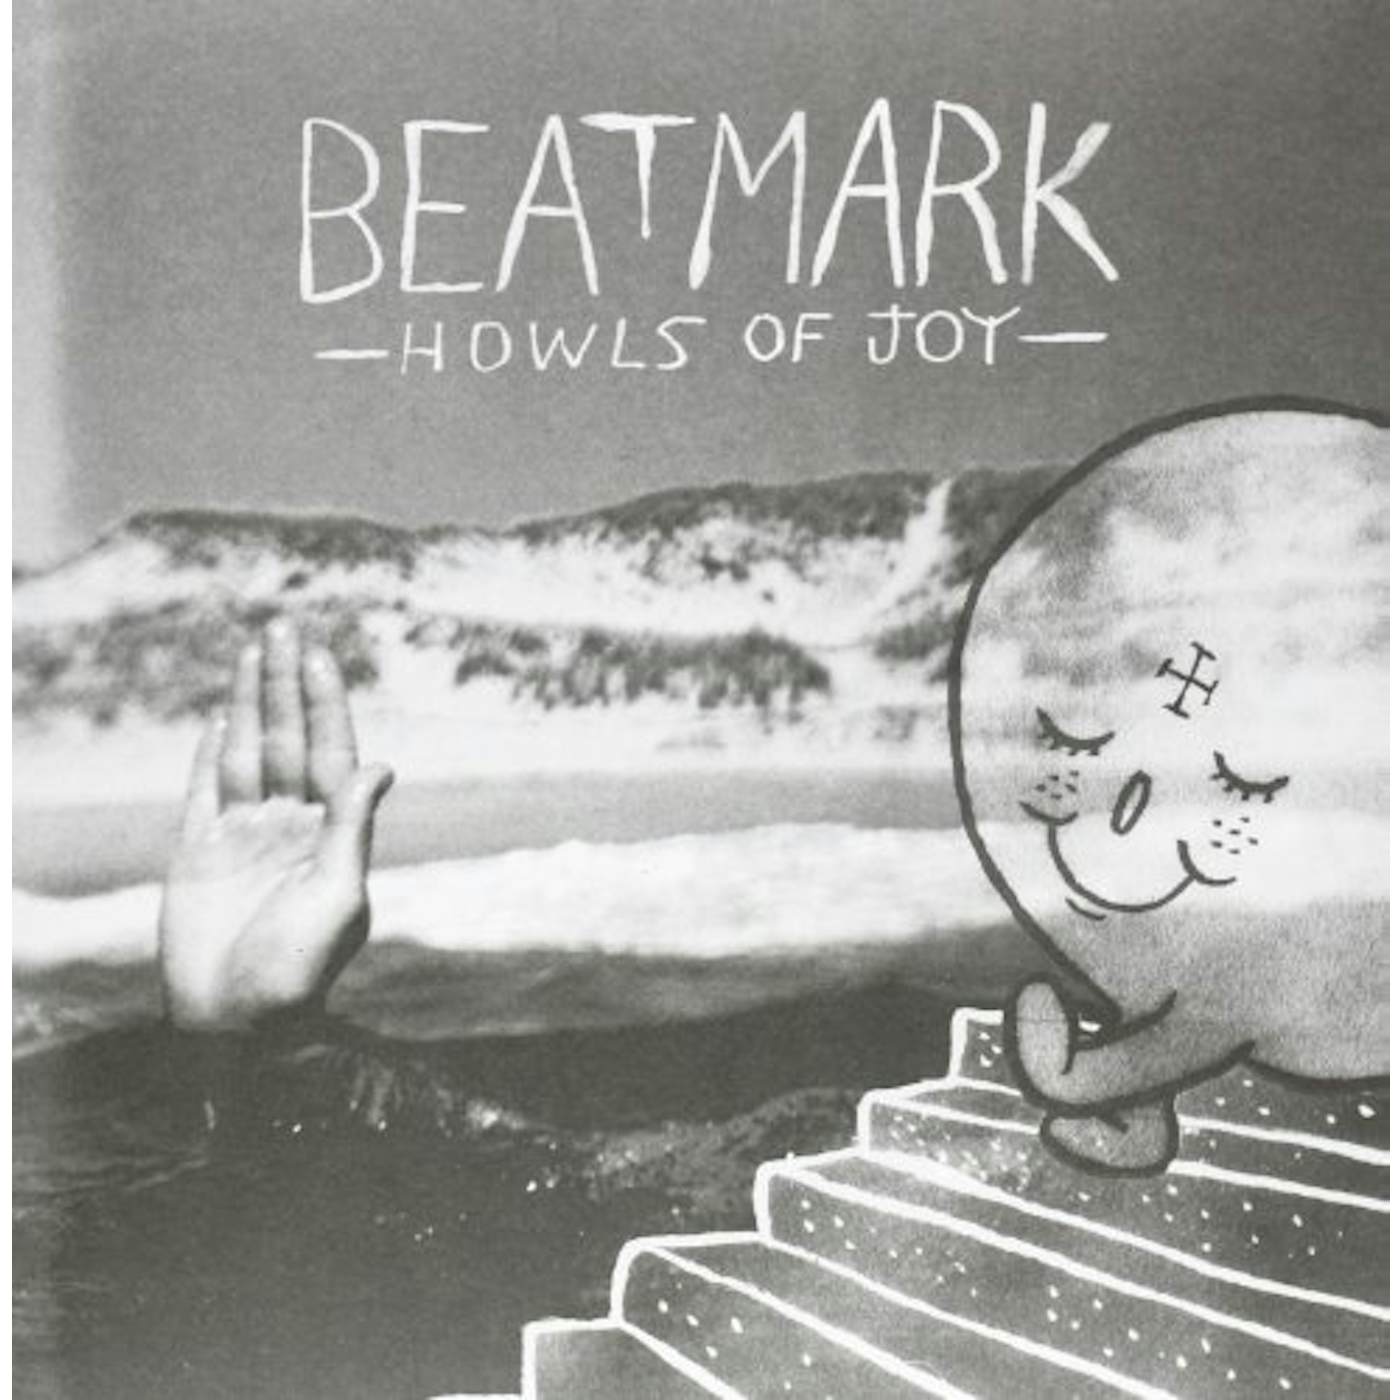 Beat Mark Howls of Joy Vinyl Record